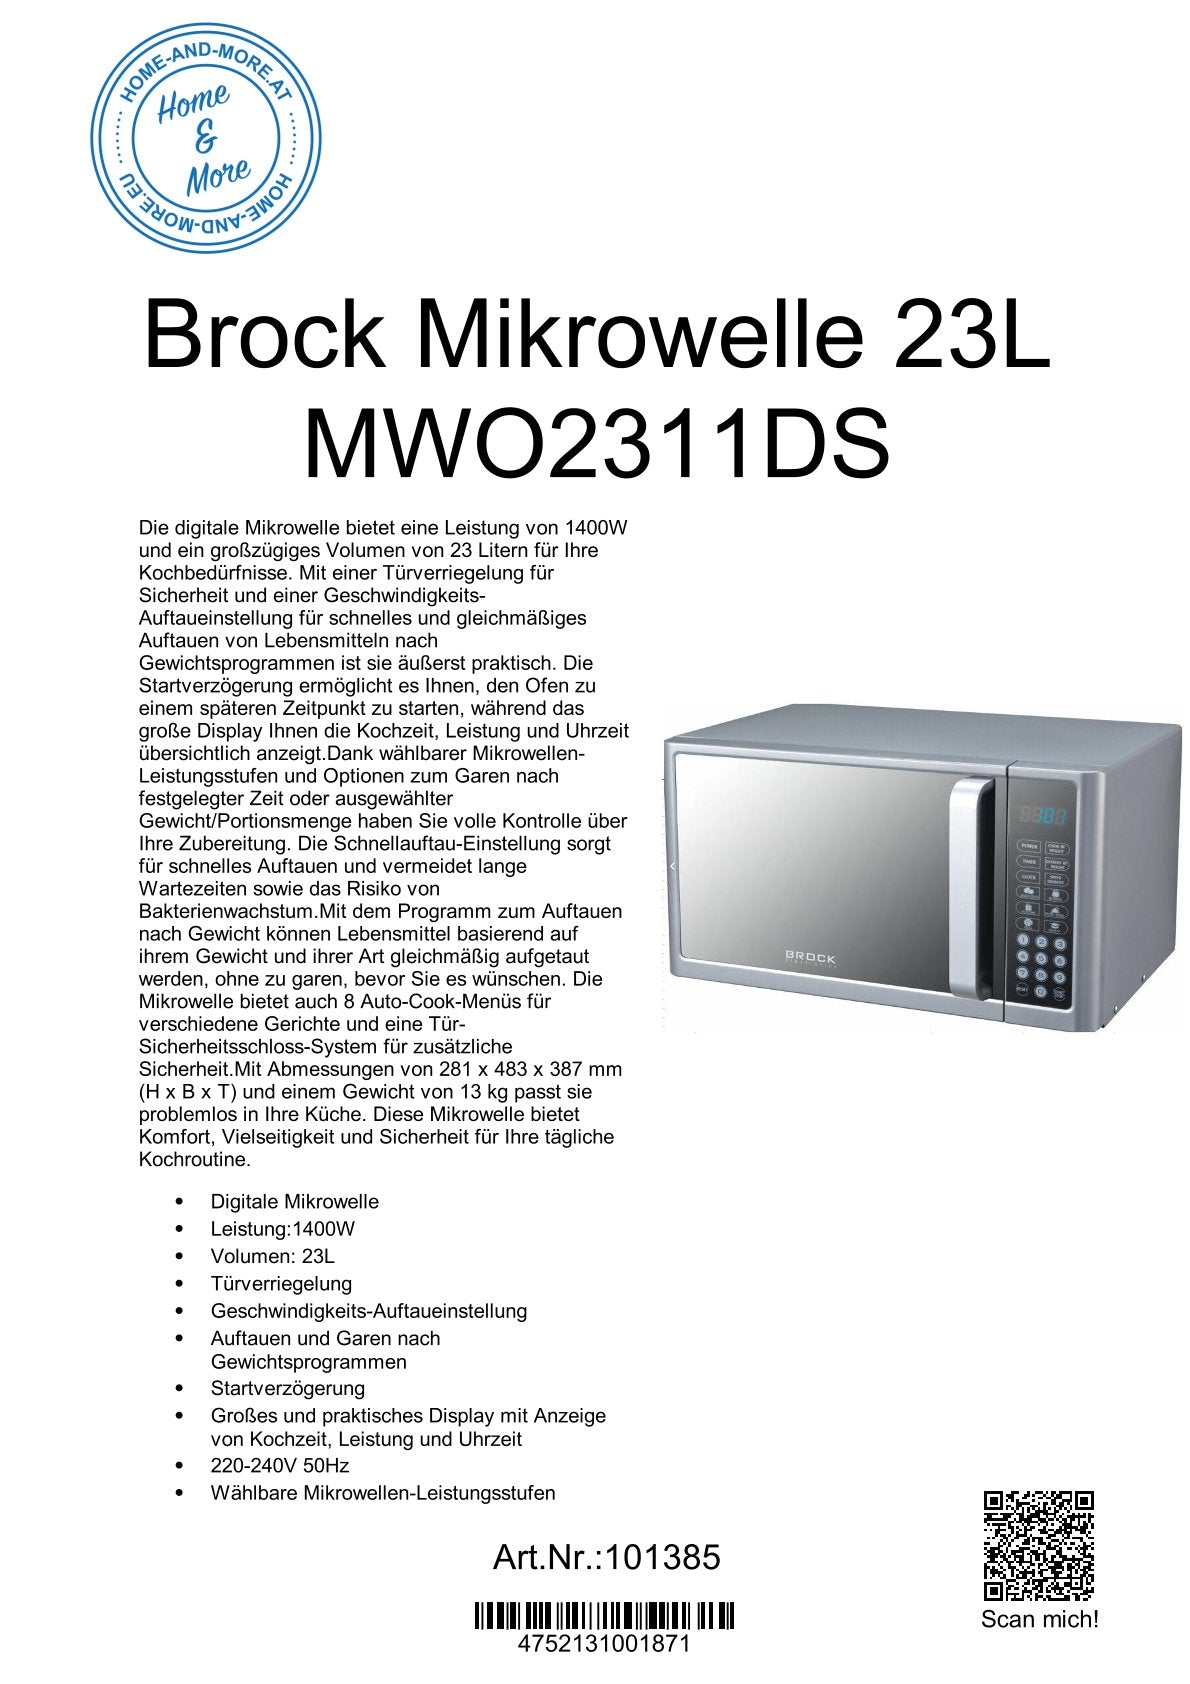 Brock Mikrowelle 23L MWO2311DS